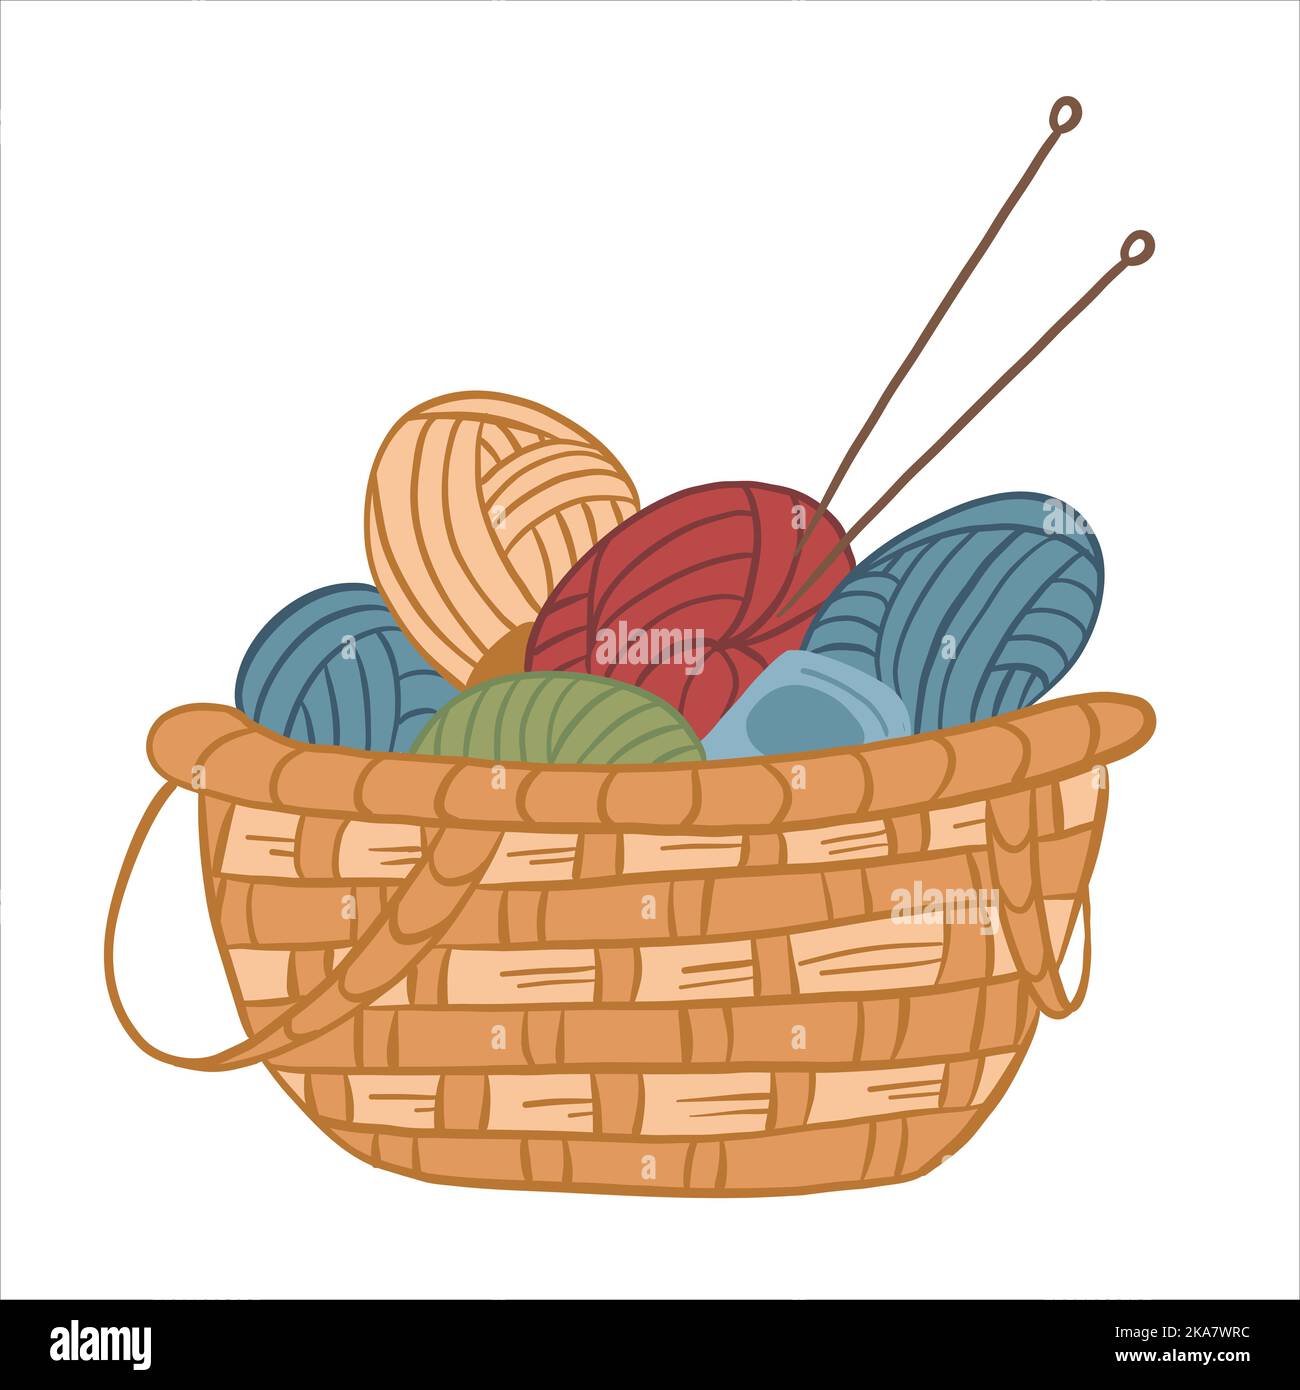 690+ Yarn Basket Stock Illustrations, Royalty-Free Vector Graphics & Clip  Art - iStock